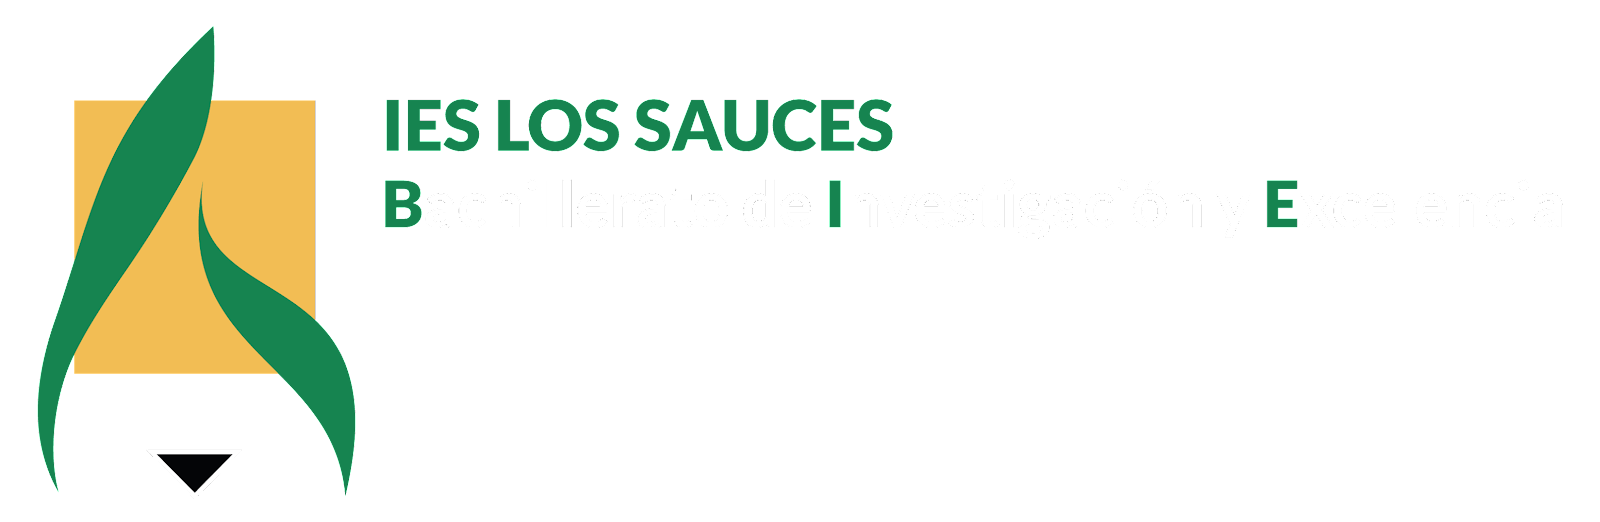 Bachillerato de Investigación/Excelencia (Ciencias) - IES Los Sauces